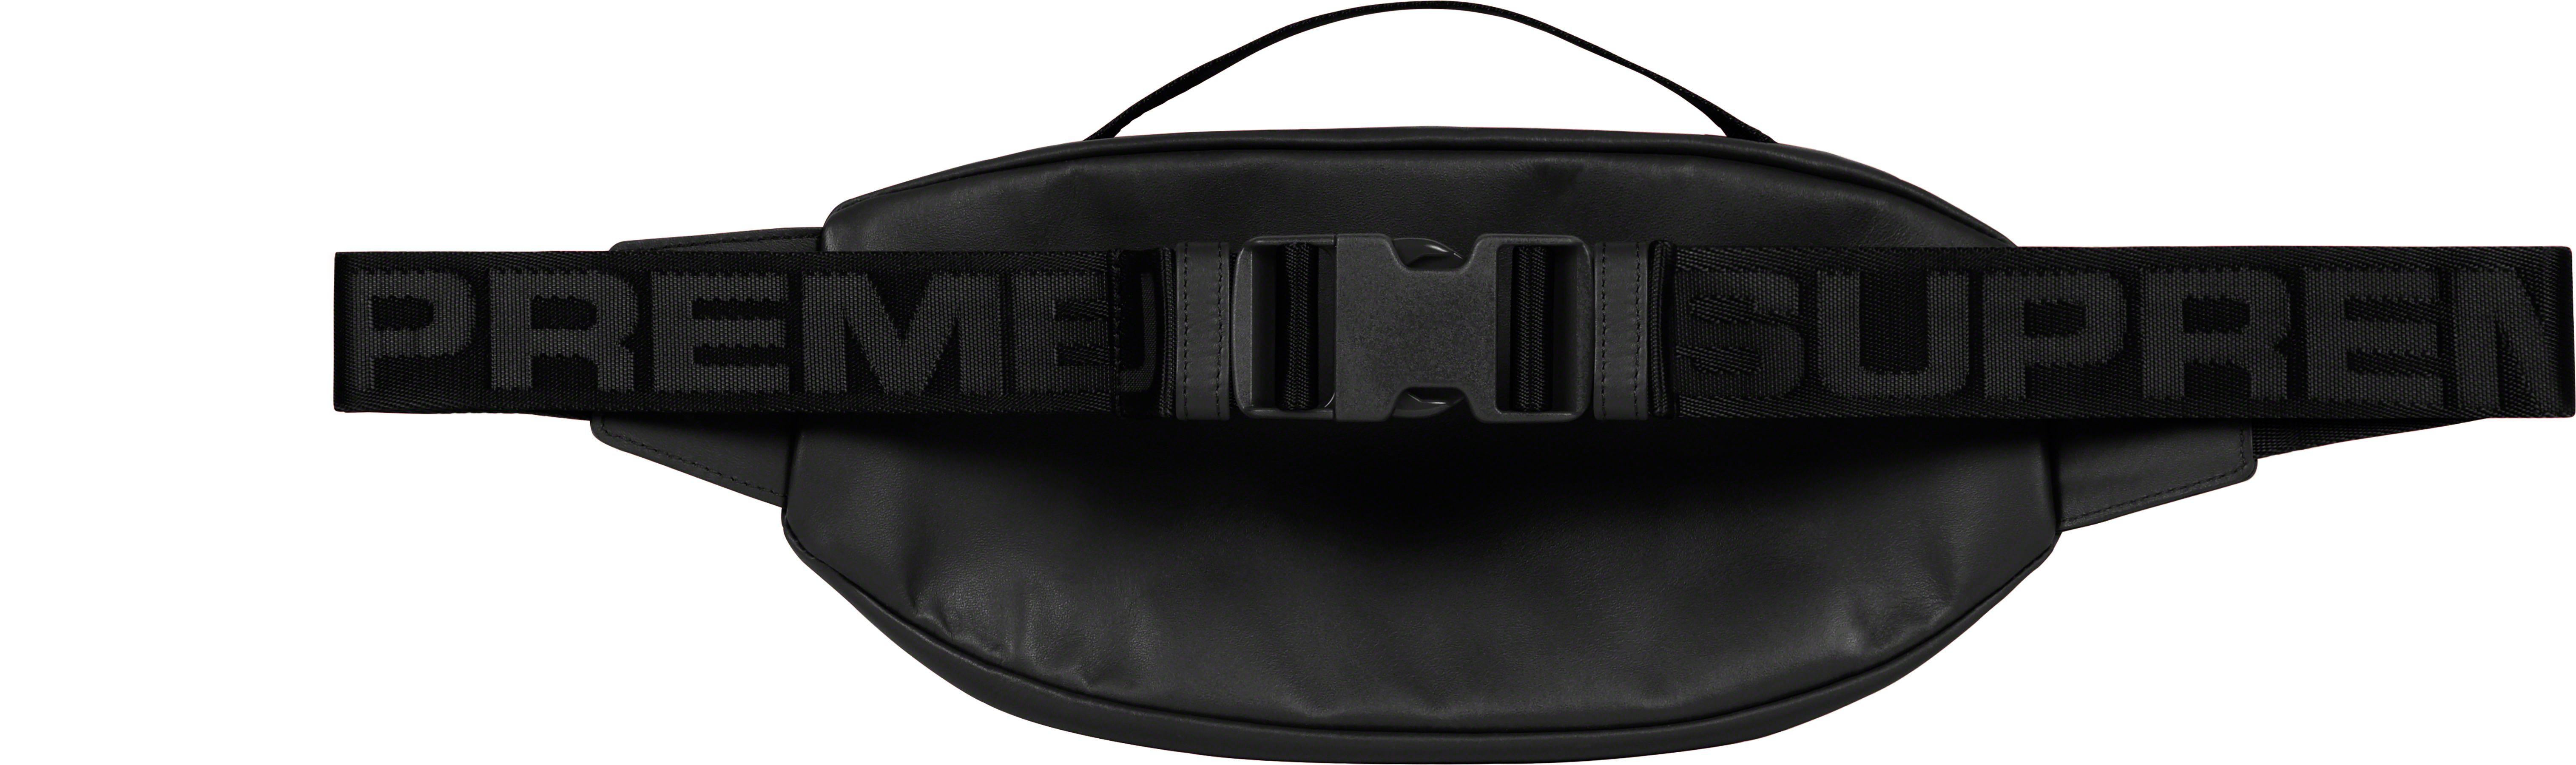 Supreme Leather Waist Bag black 23fw-